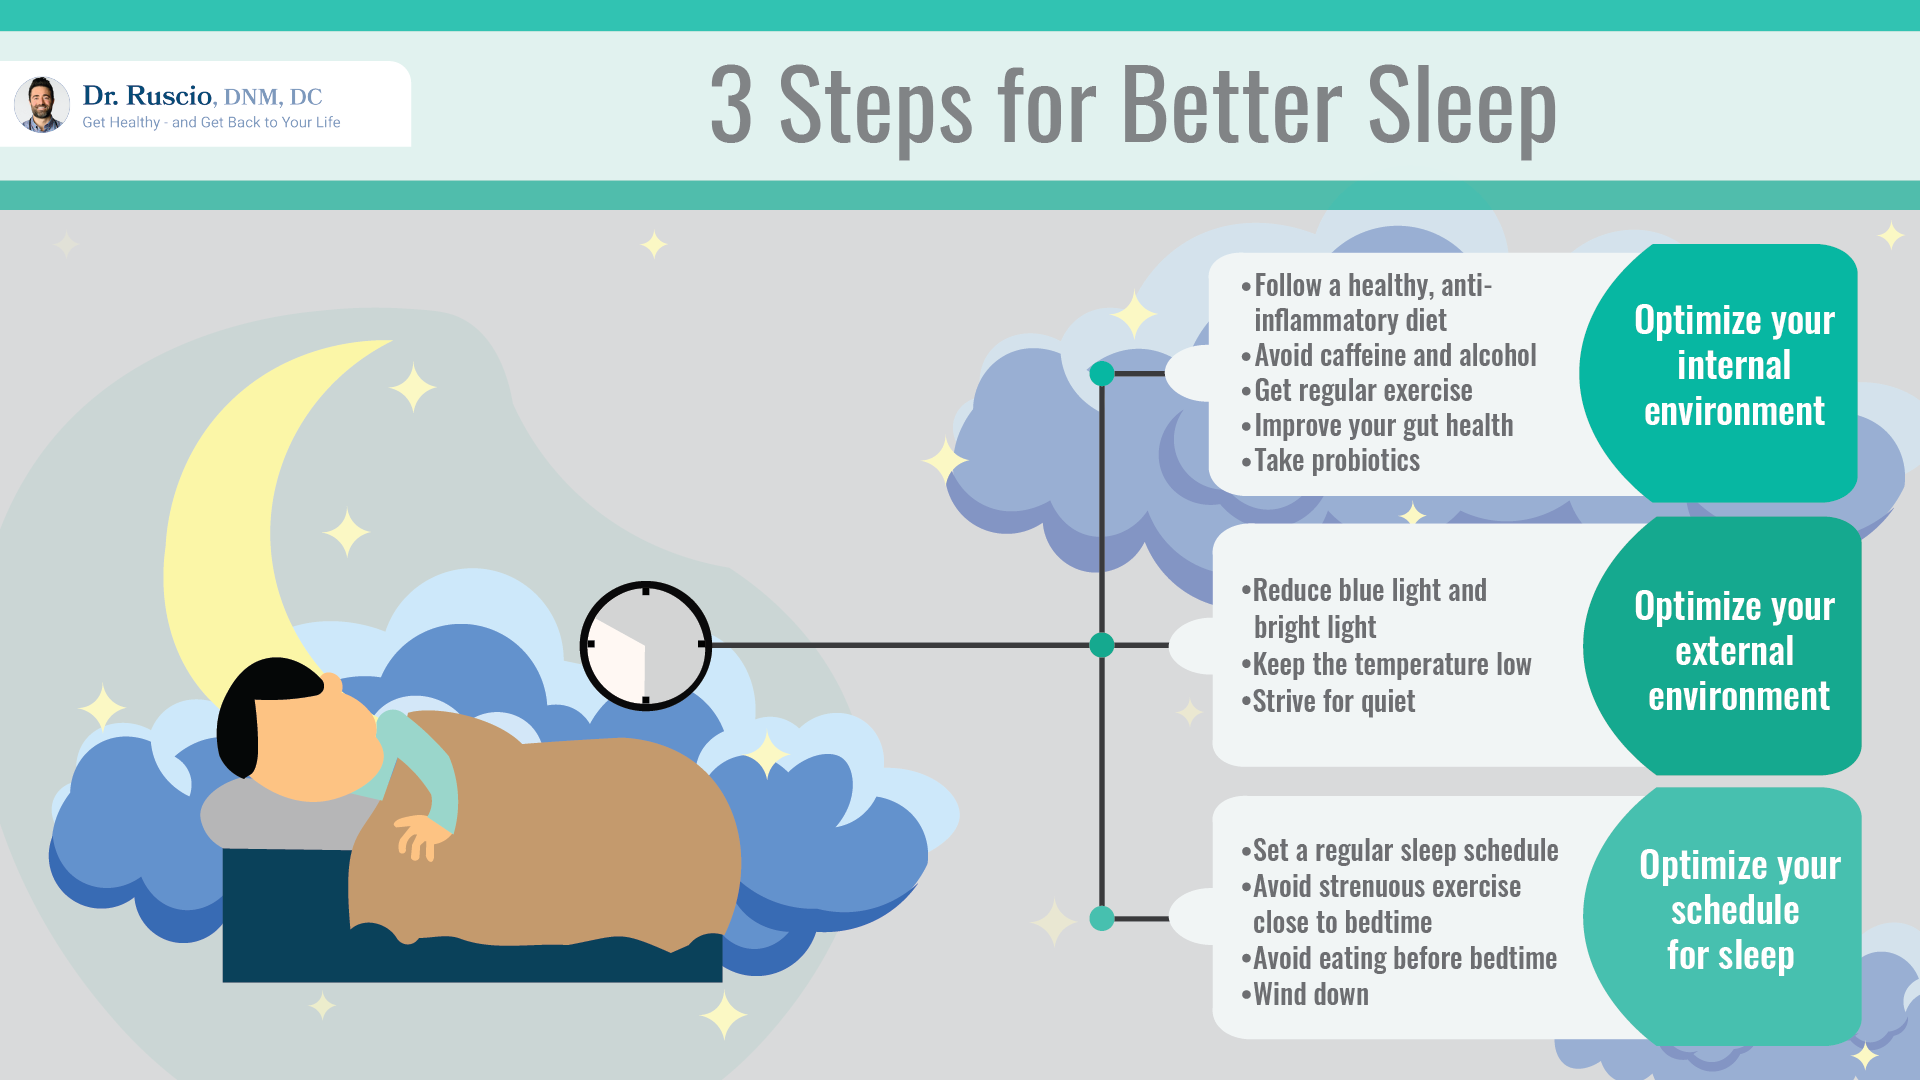 How to Identify and Improve Poor Sleep Hygiene - JZrJsAQ7SFMoRi4rWkr ATkNn2mNcnS04OC5v5JWZfrPdCLOu0HlB vnroZvA8DUOxzqZec4Mti0nqW1ZyrTXMcp82fewMOM8B2PkxJ8L